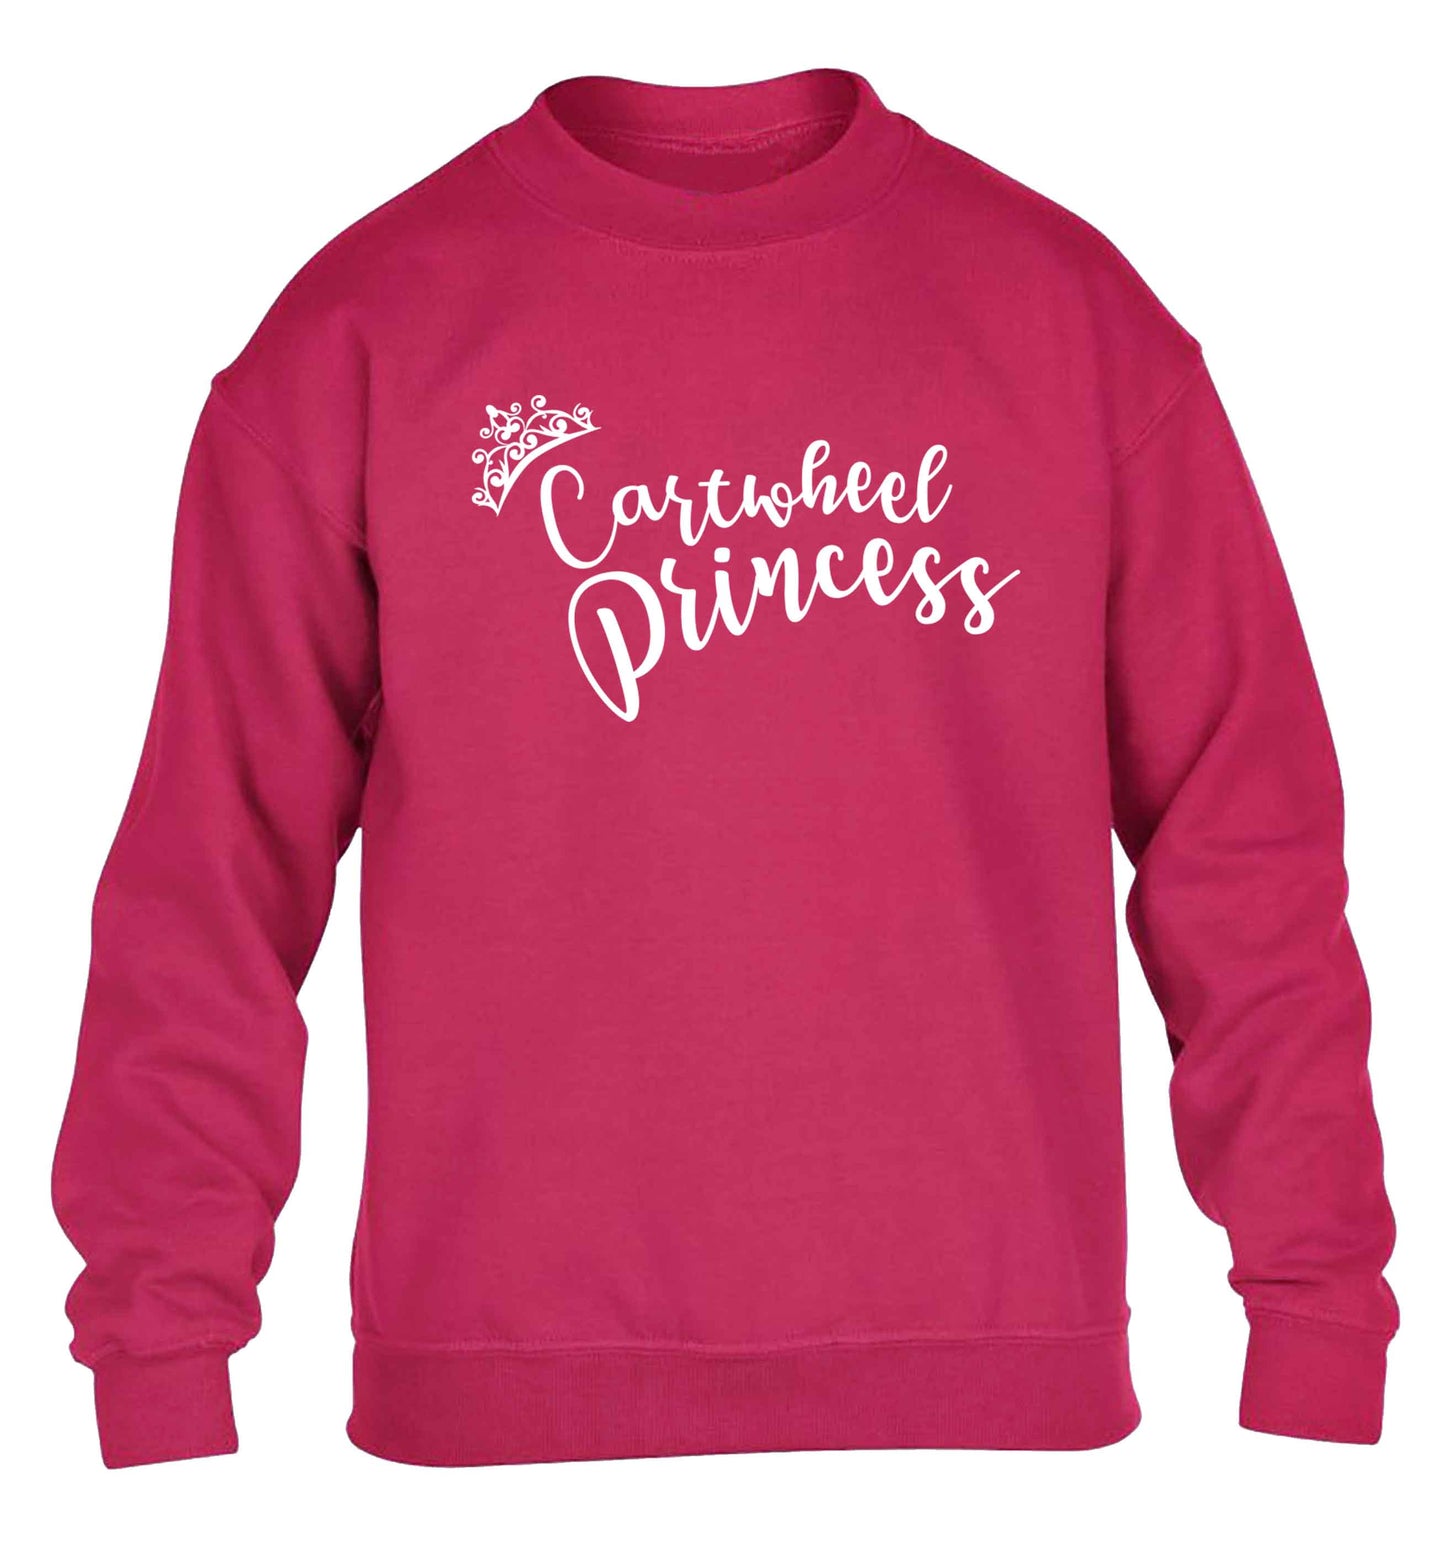 Cartwheel princess children's pink sweater 12-13 Years